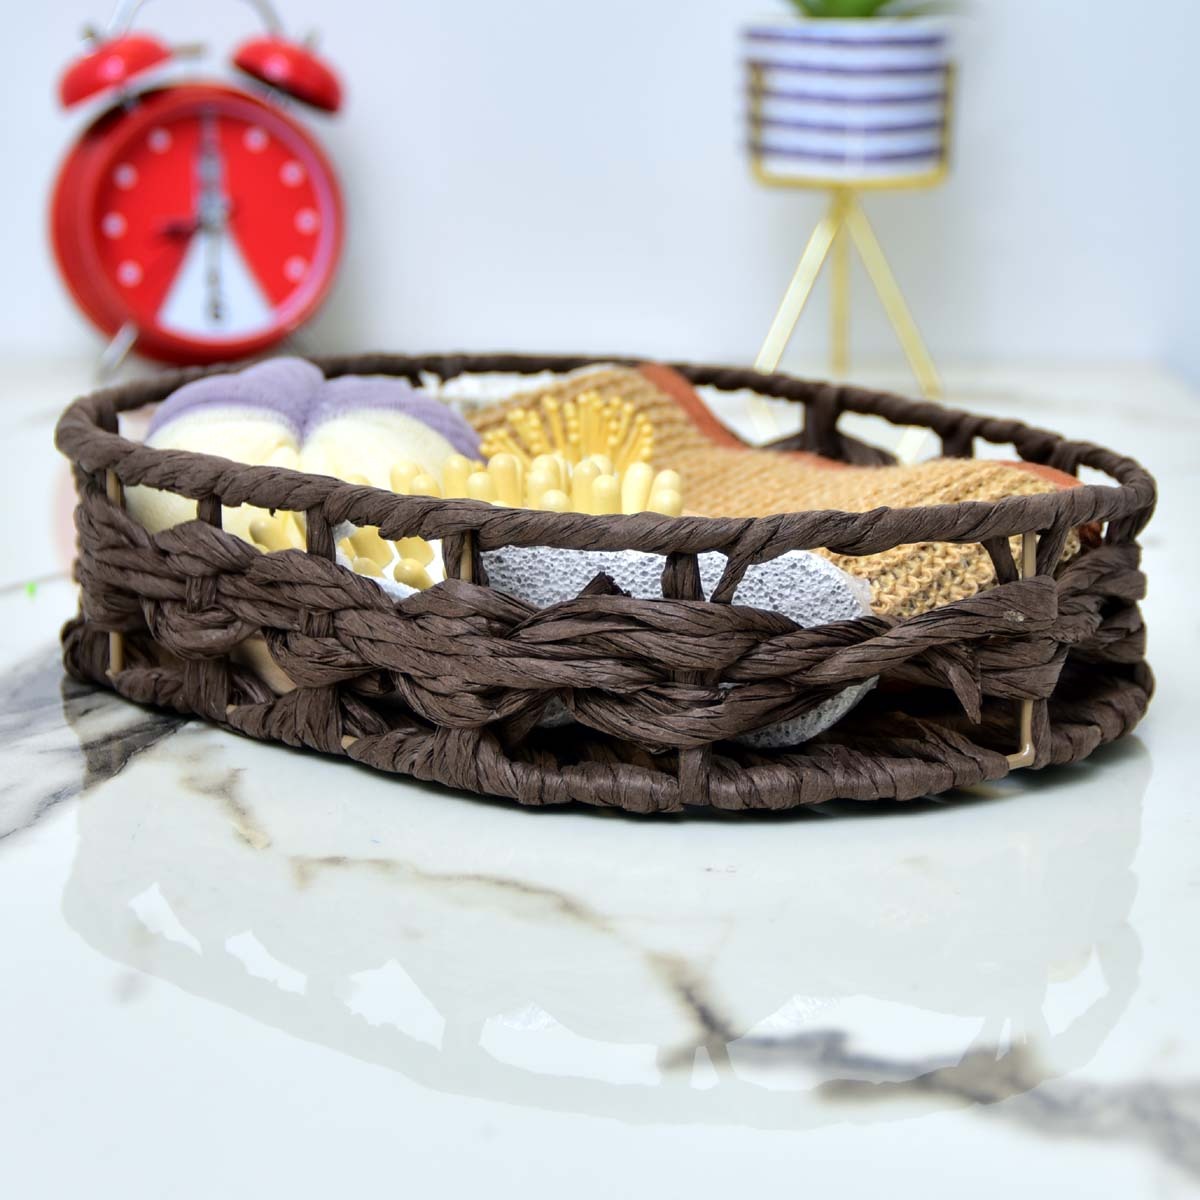 Luxury Bath Gift Set (Oval Chocolate) - waseeh.com